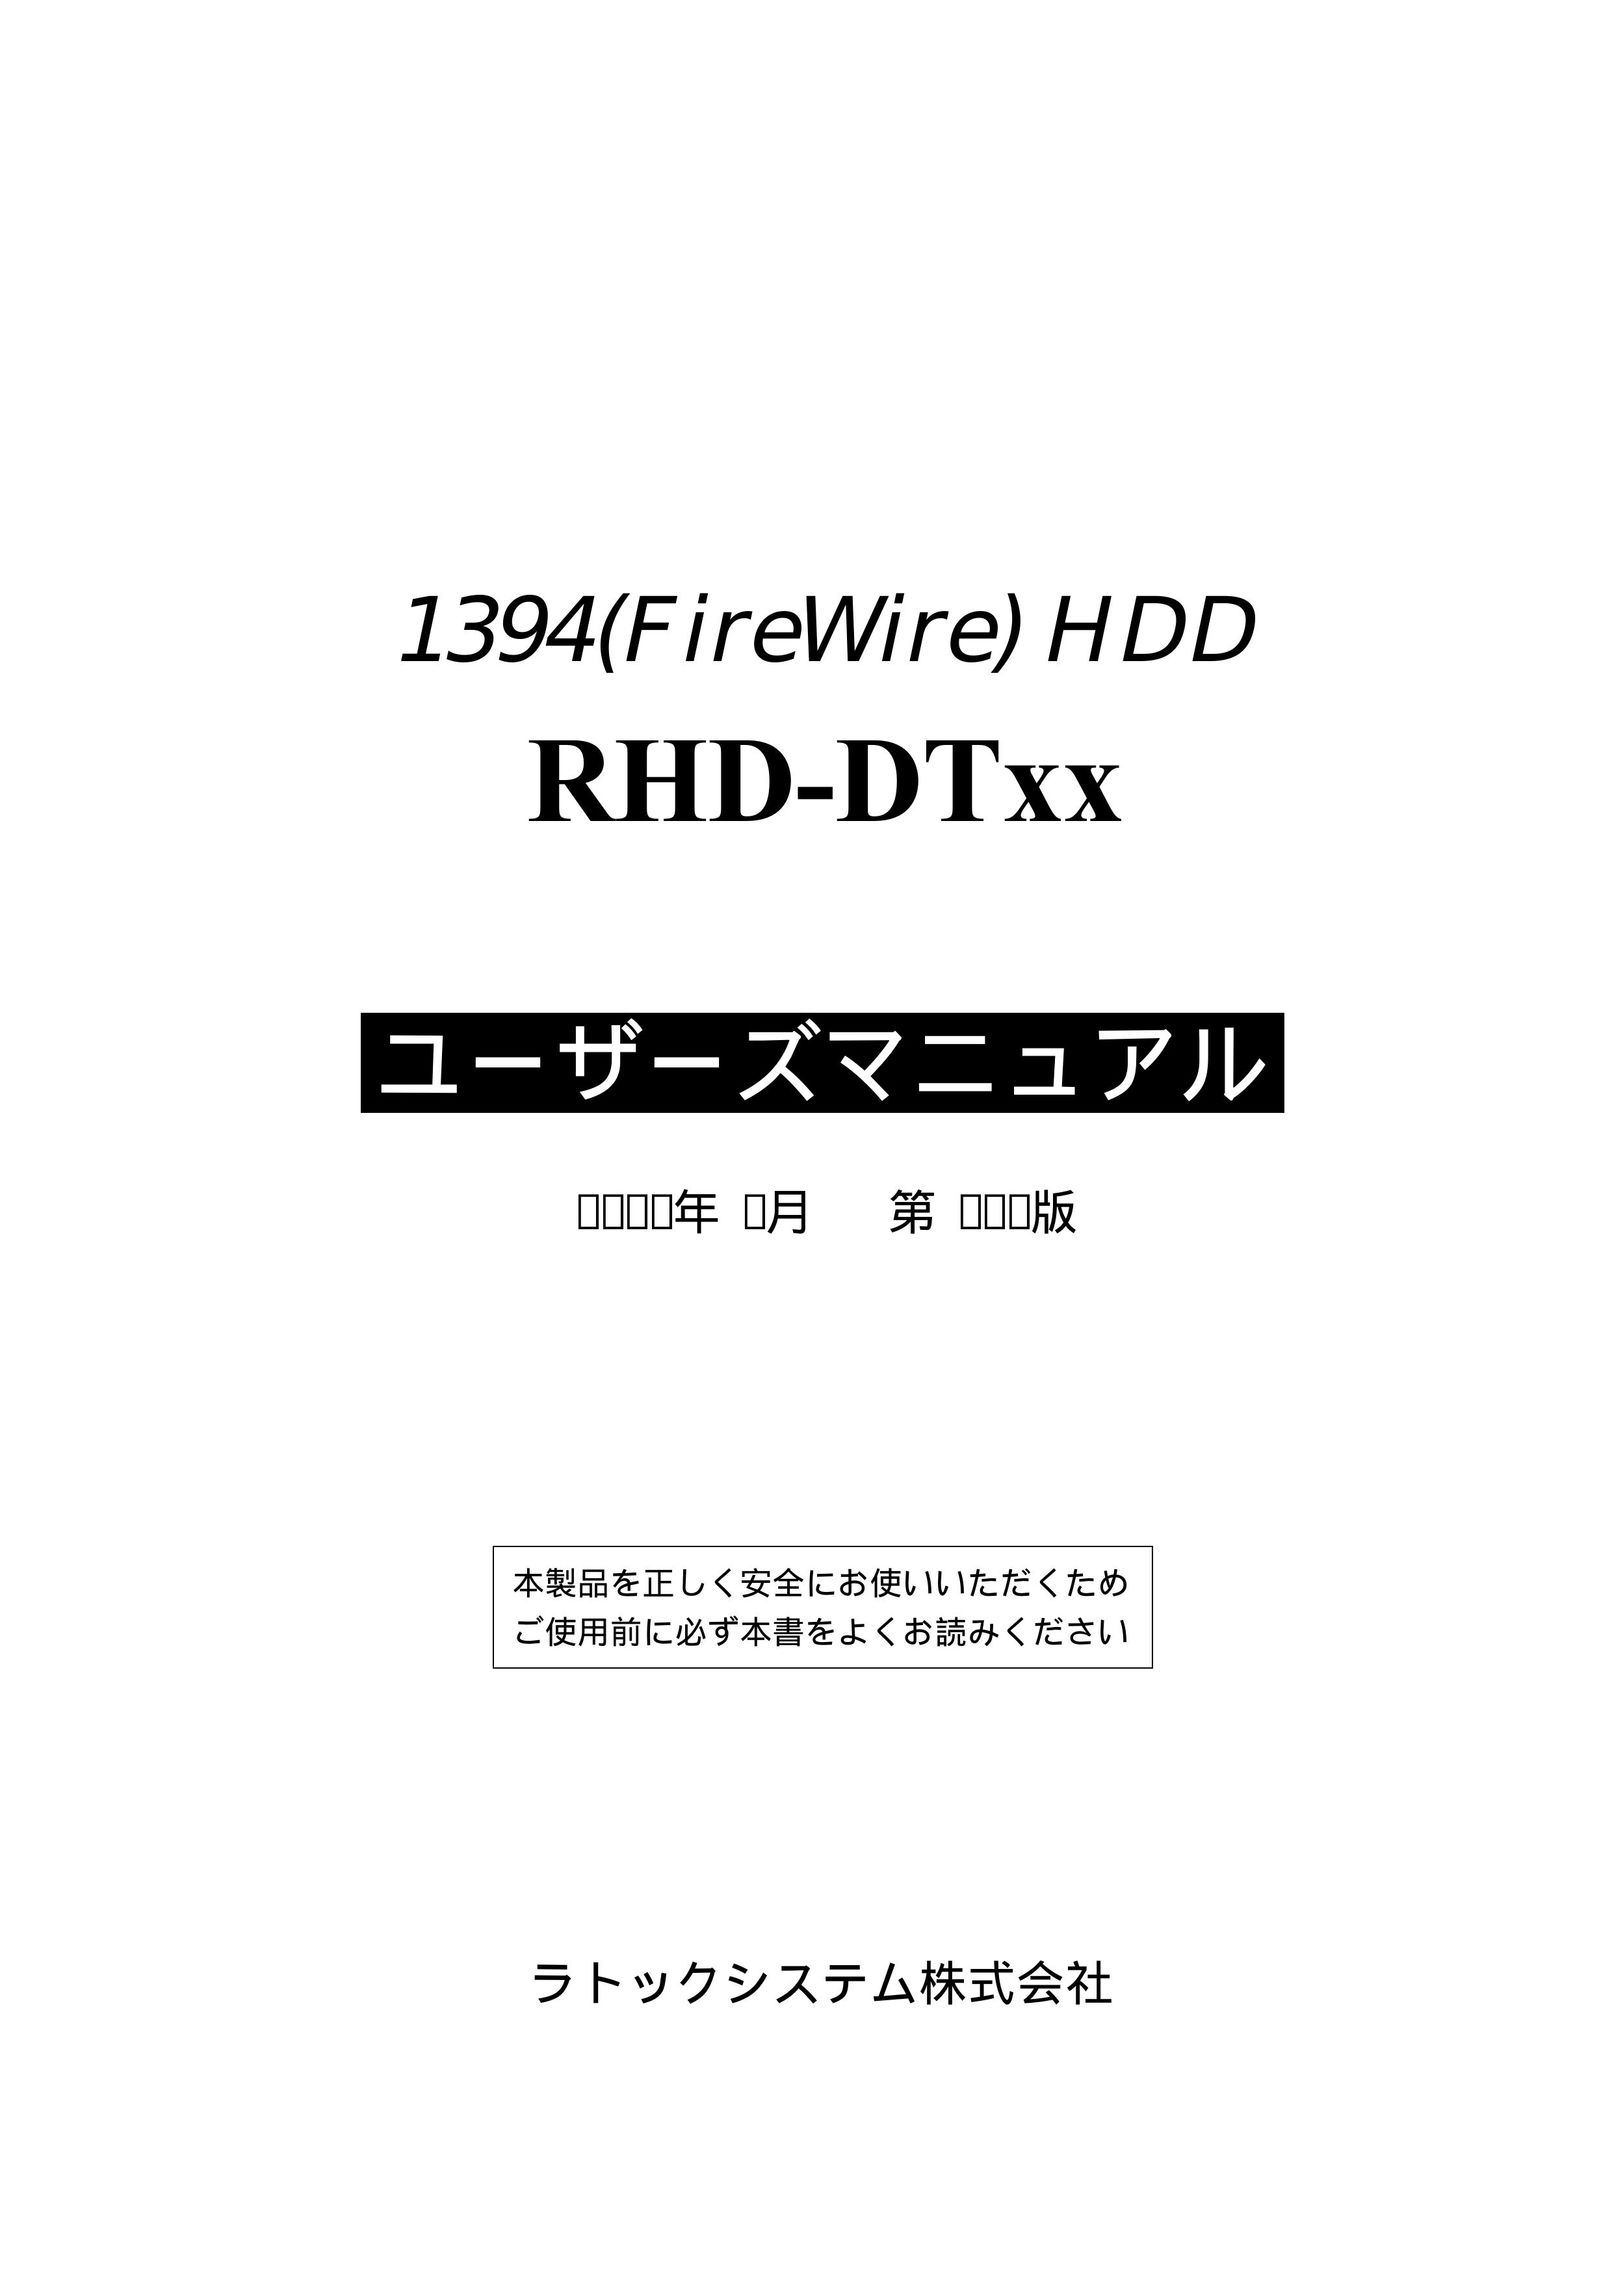 Ratoc Systems RHD-DTxx Network Card User Manual